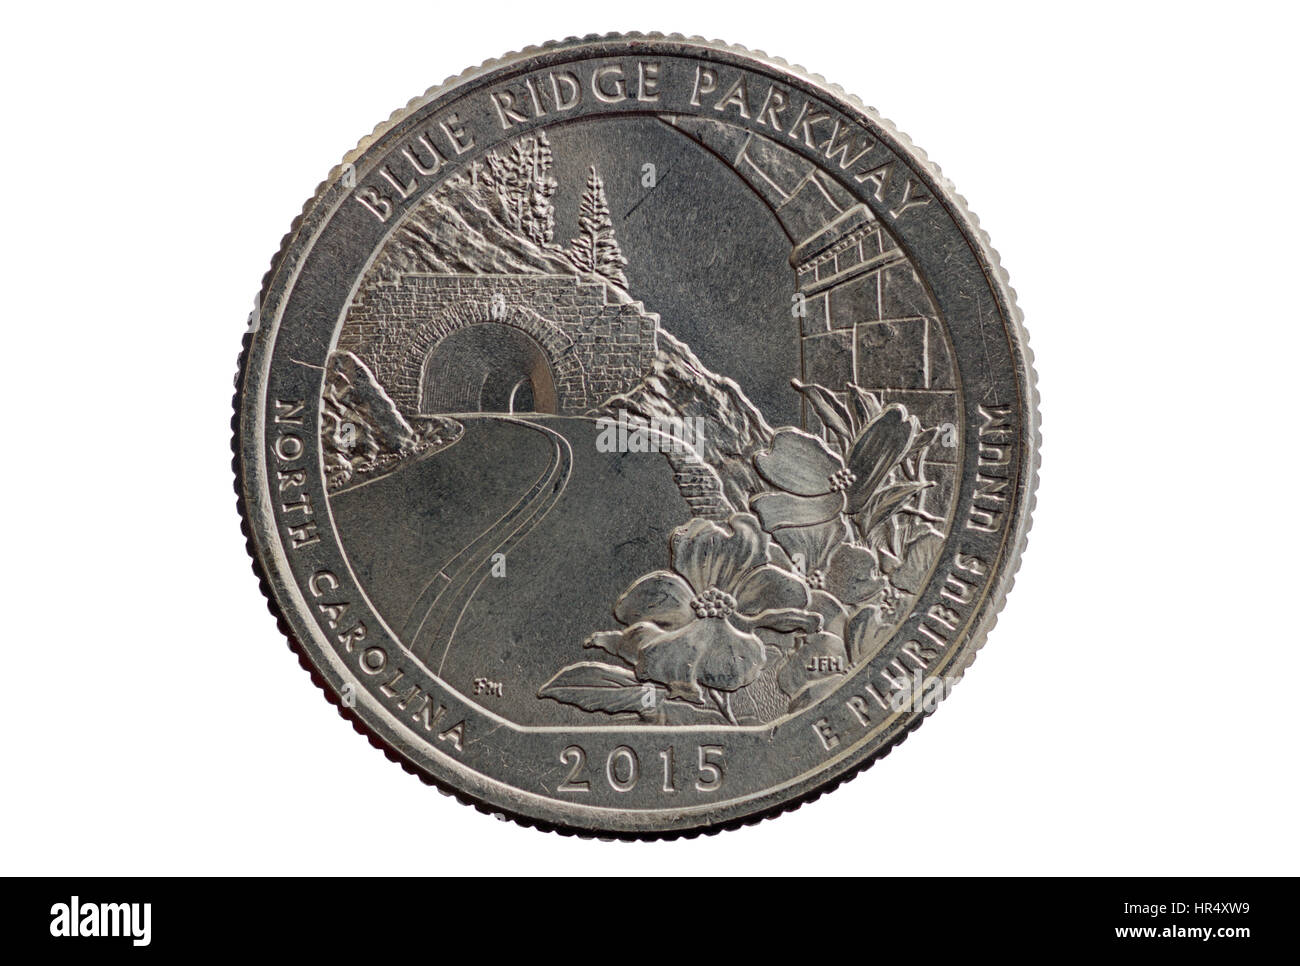 blue ridge parkway North Carolina commemorative quarter coin isolated on white Stock Photo